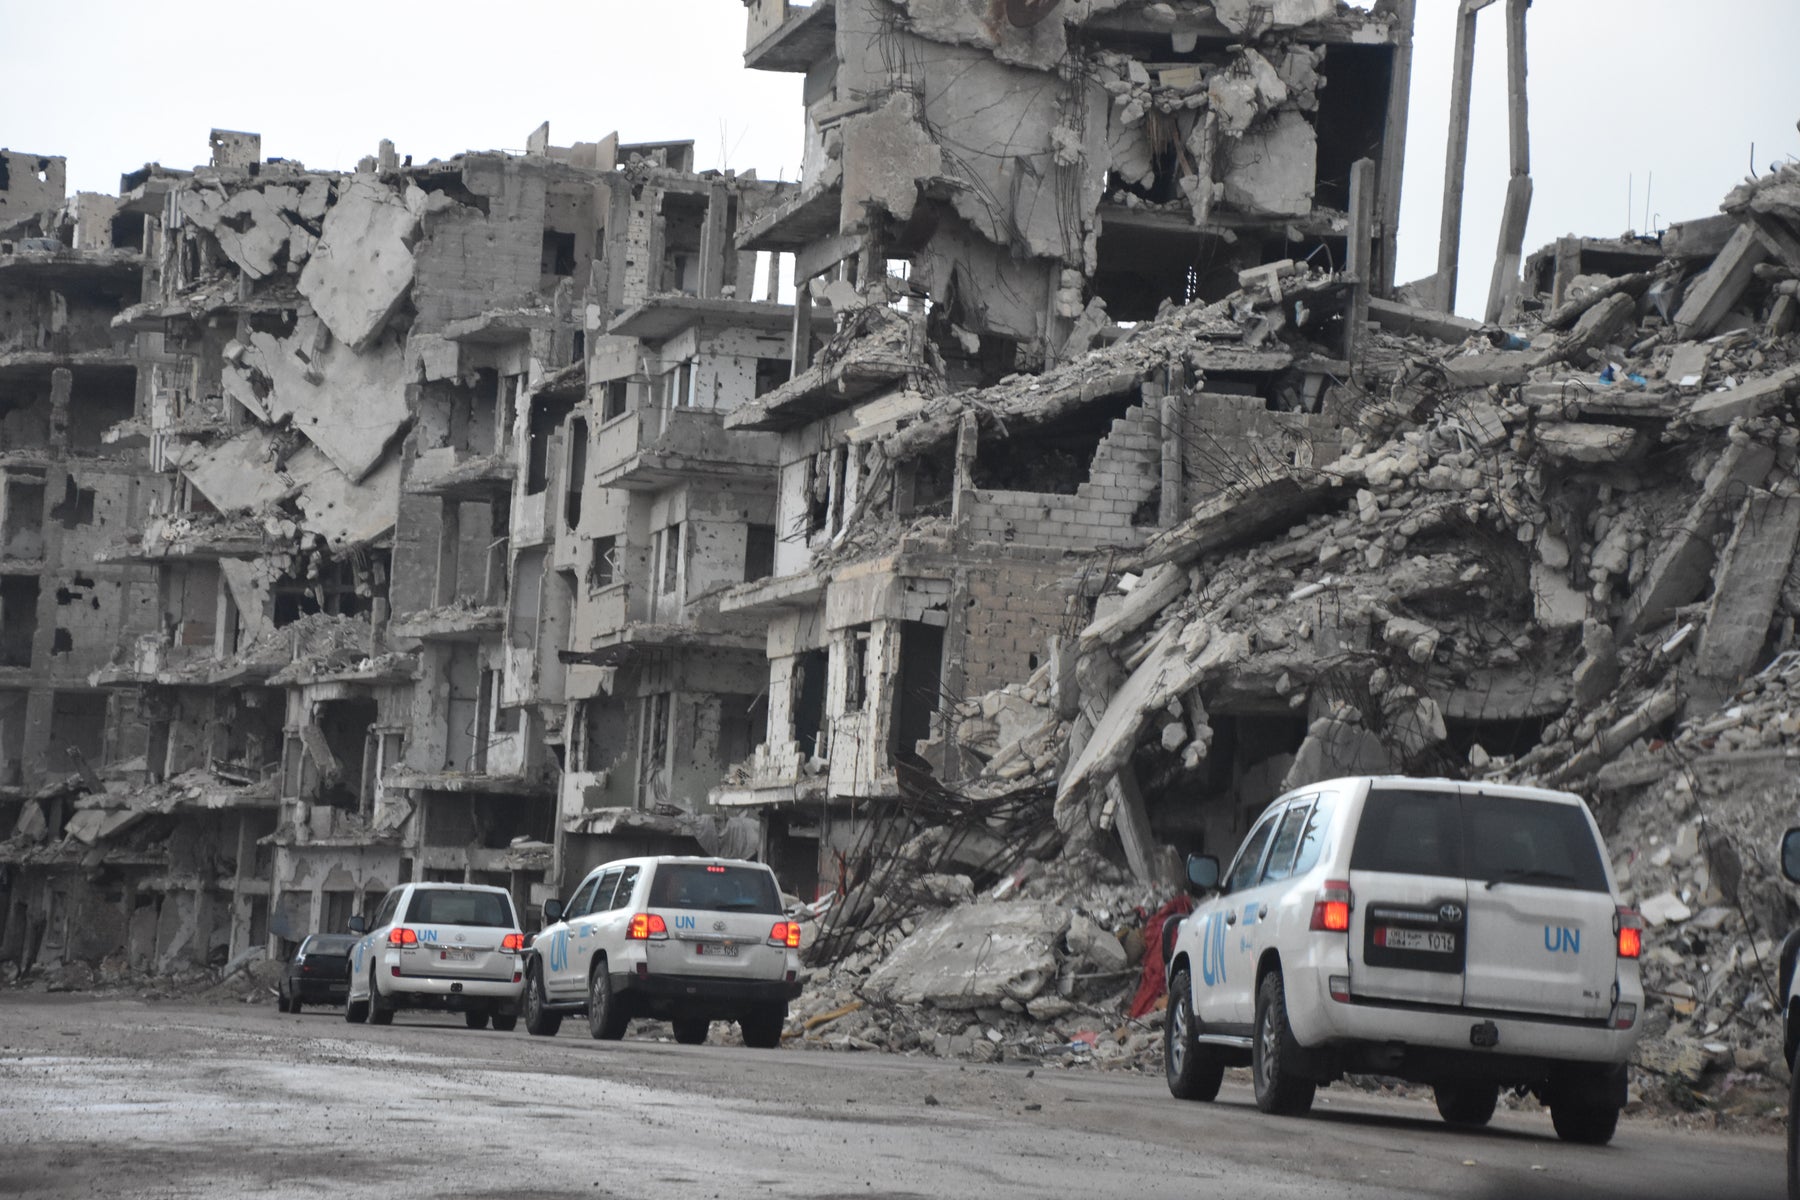 War torn street in Syria